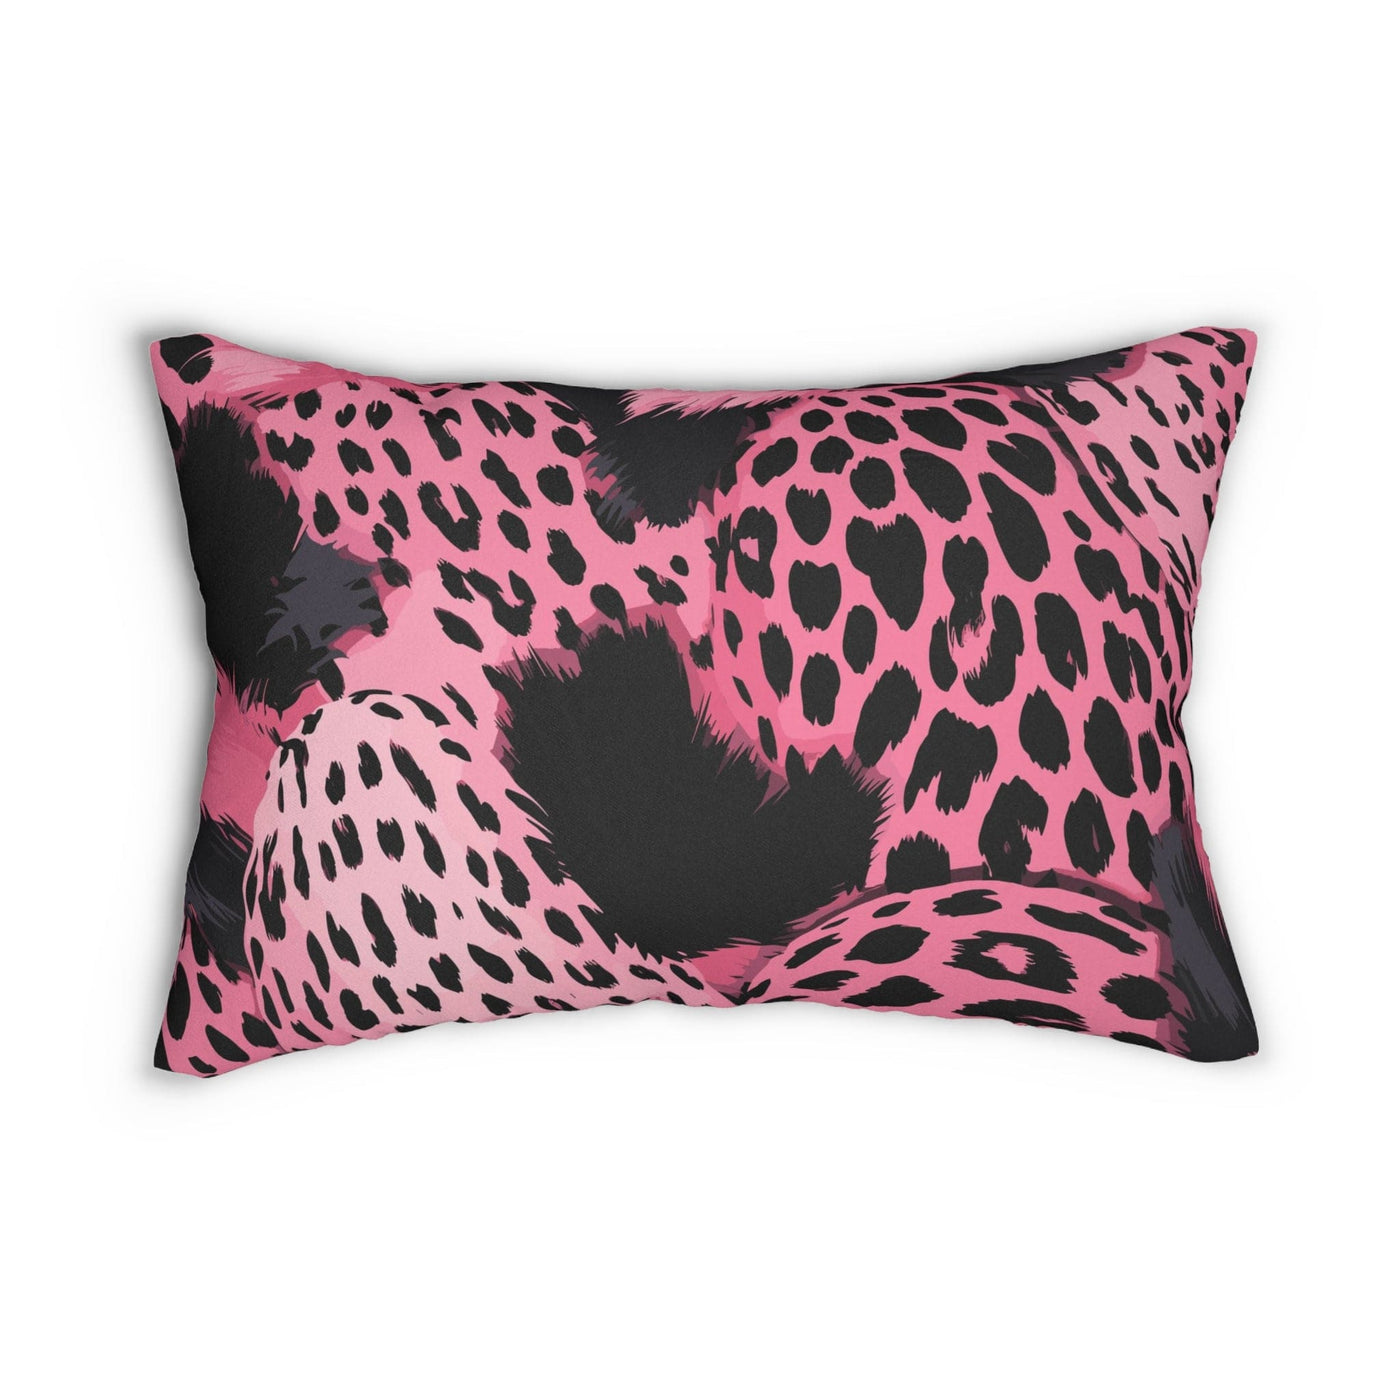 Lumbar Pillow Pink And Black Leopard Spots Illustration - Home Decor